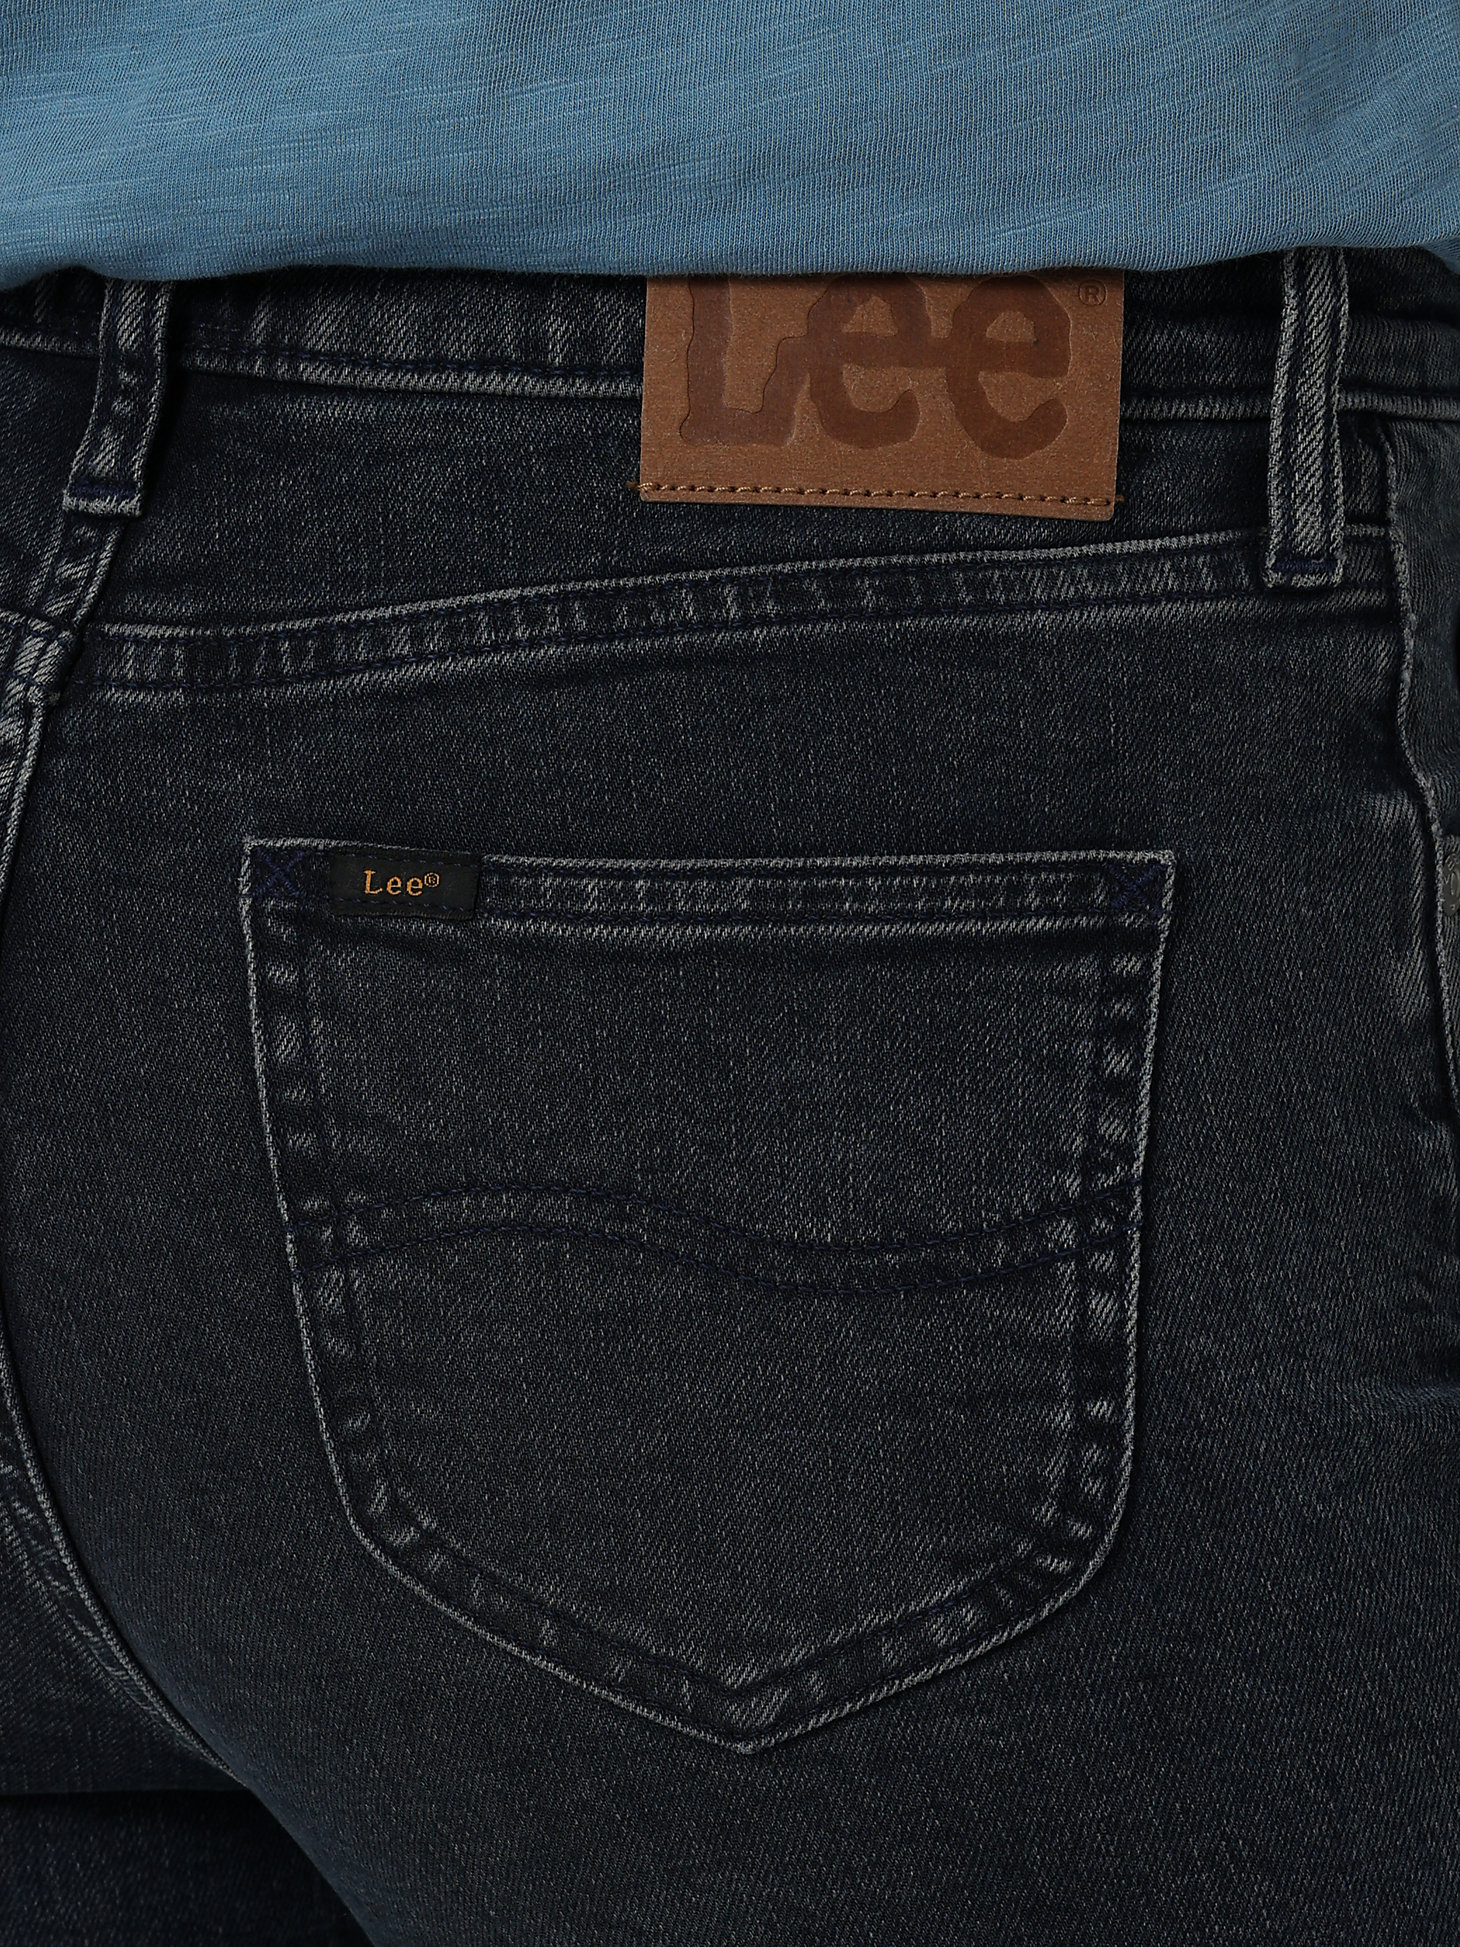 Women's Lee European Collection High Rise Split Flare Jean in Smokey Indigo alternative view 5